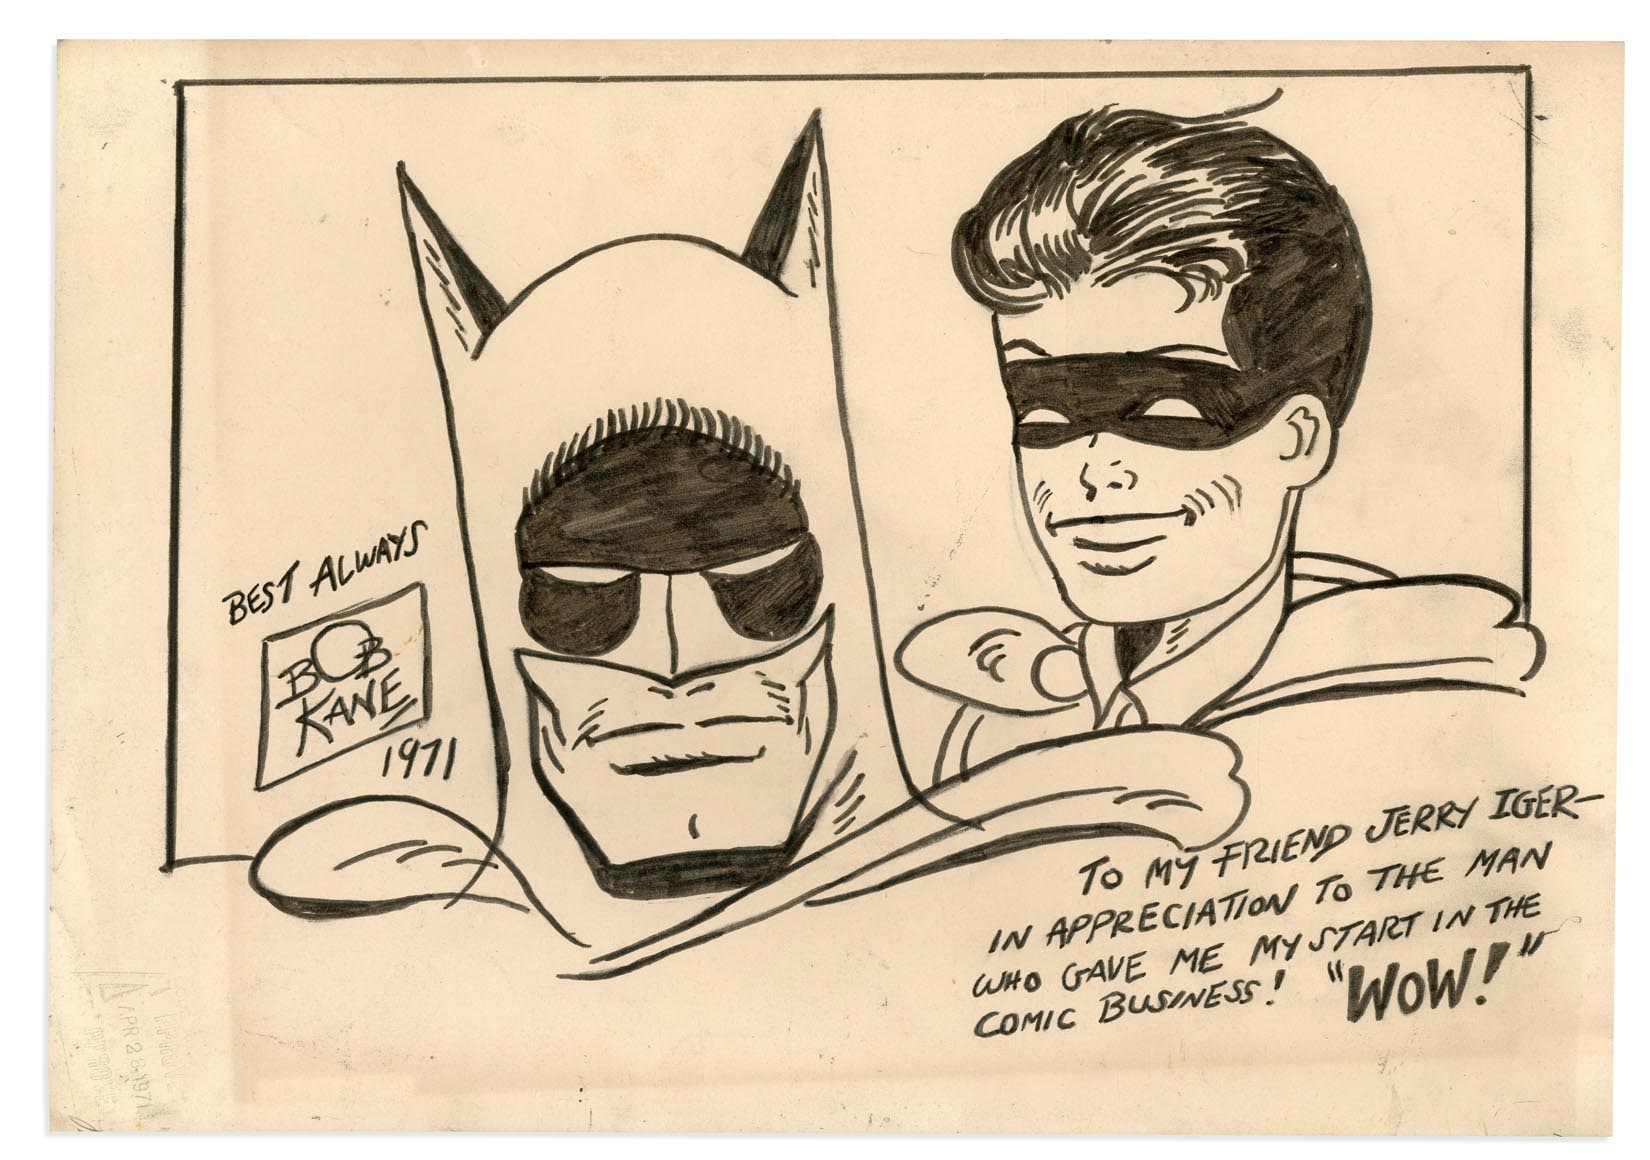 - 1971 Bob Kane "Batman" Original Art to Jerry Iger (PSA)